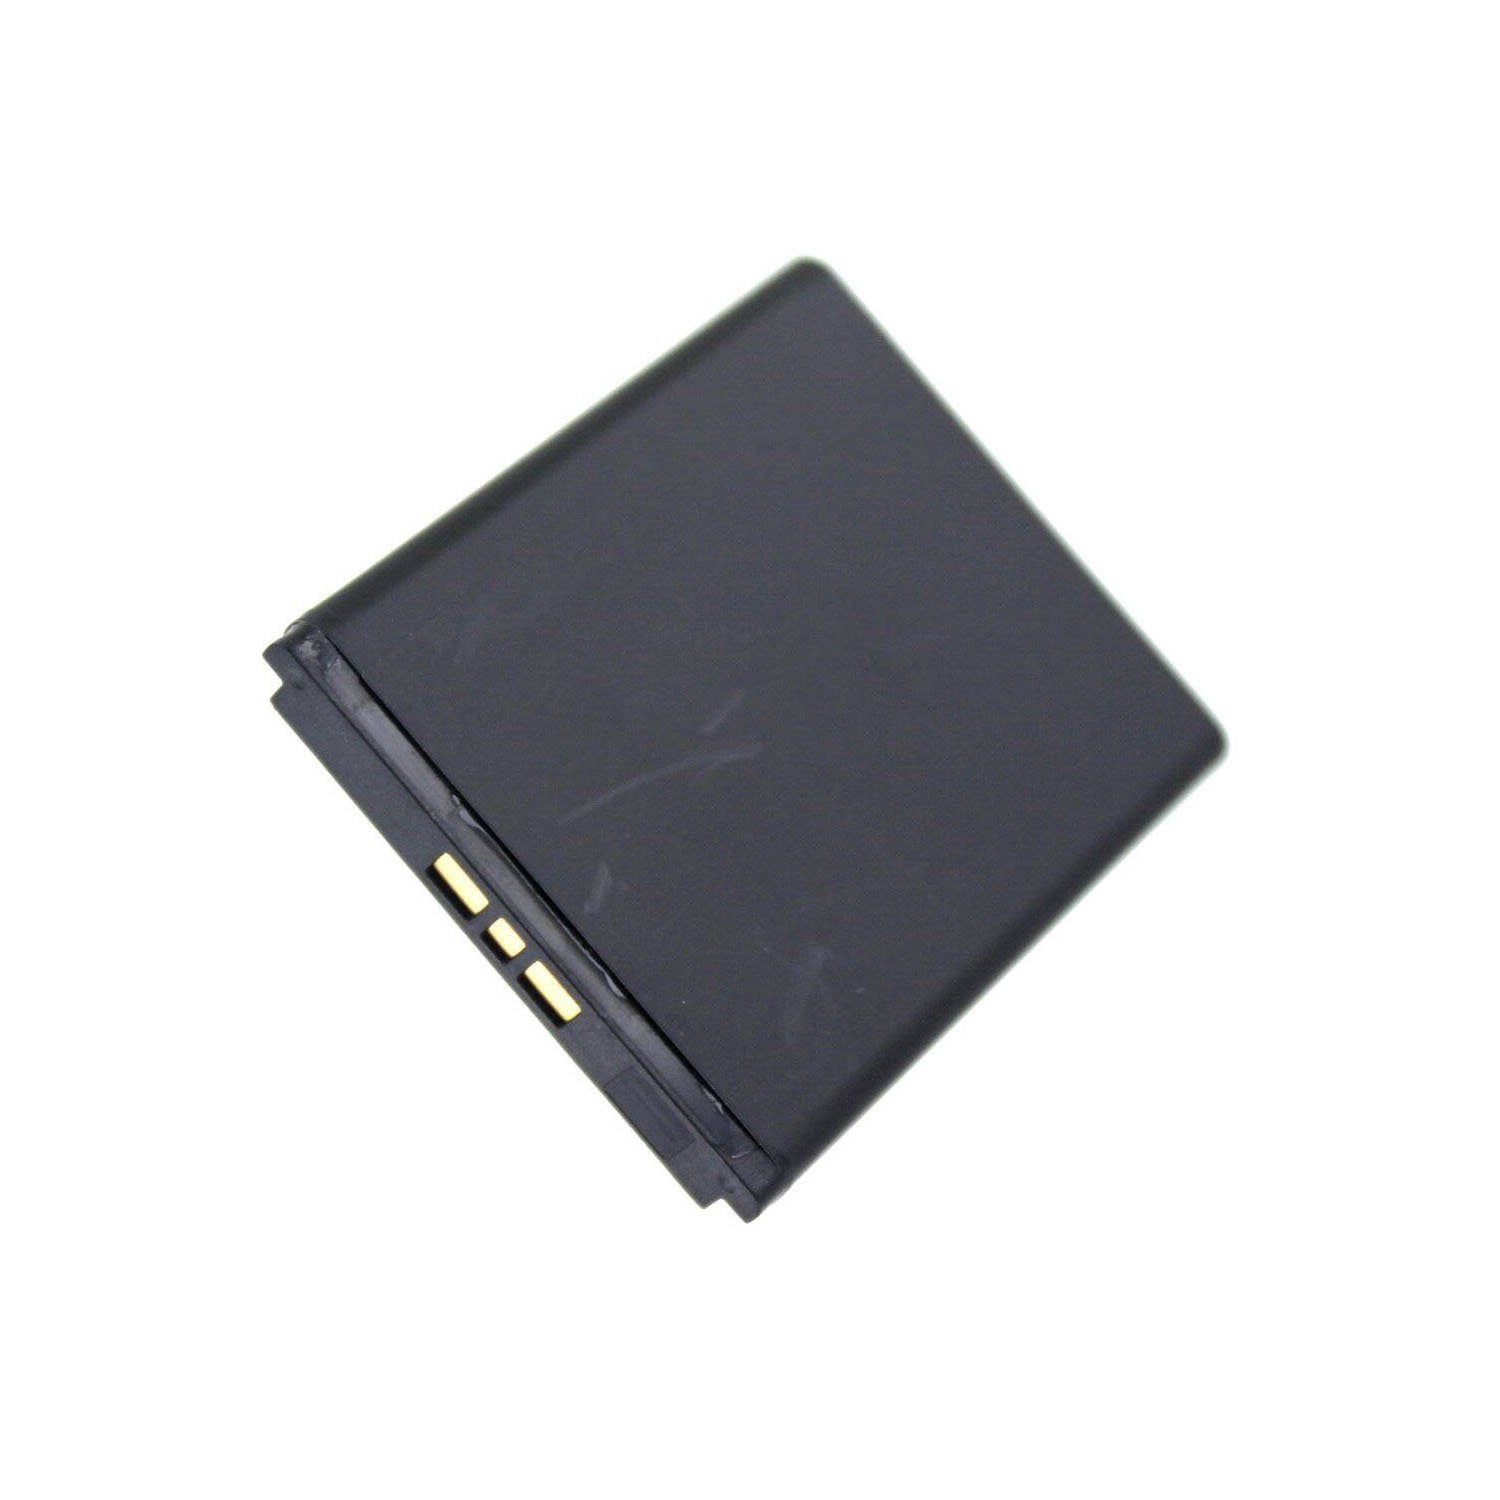 AGI Akku kompatibel mit Sony Ericsson W205 Akku Akku